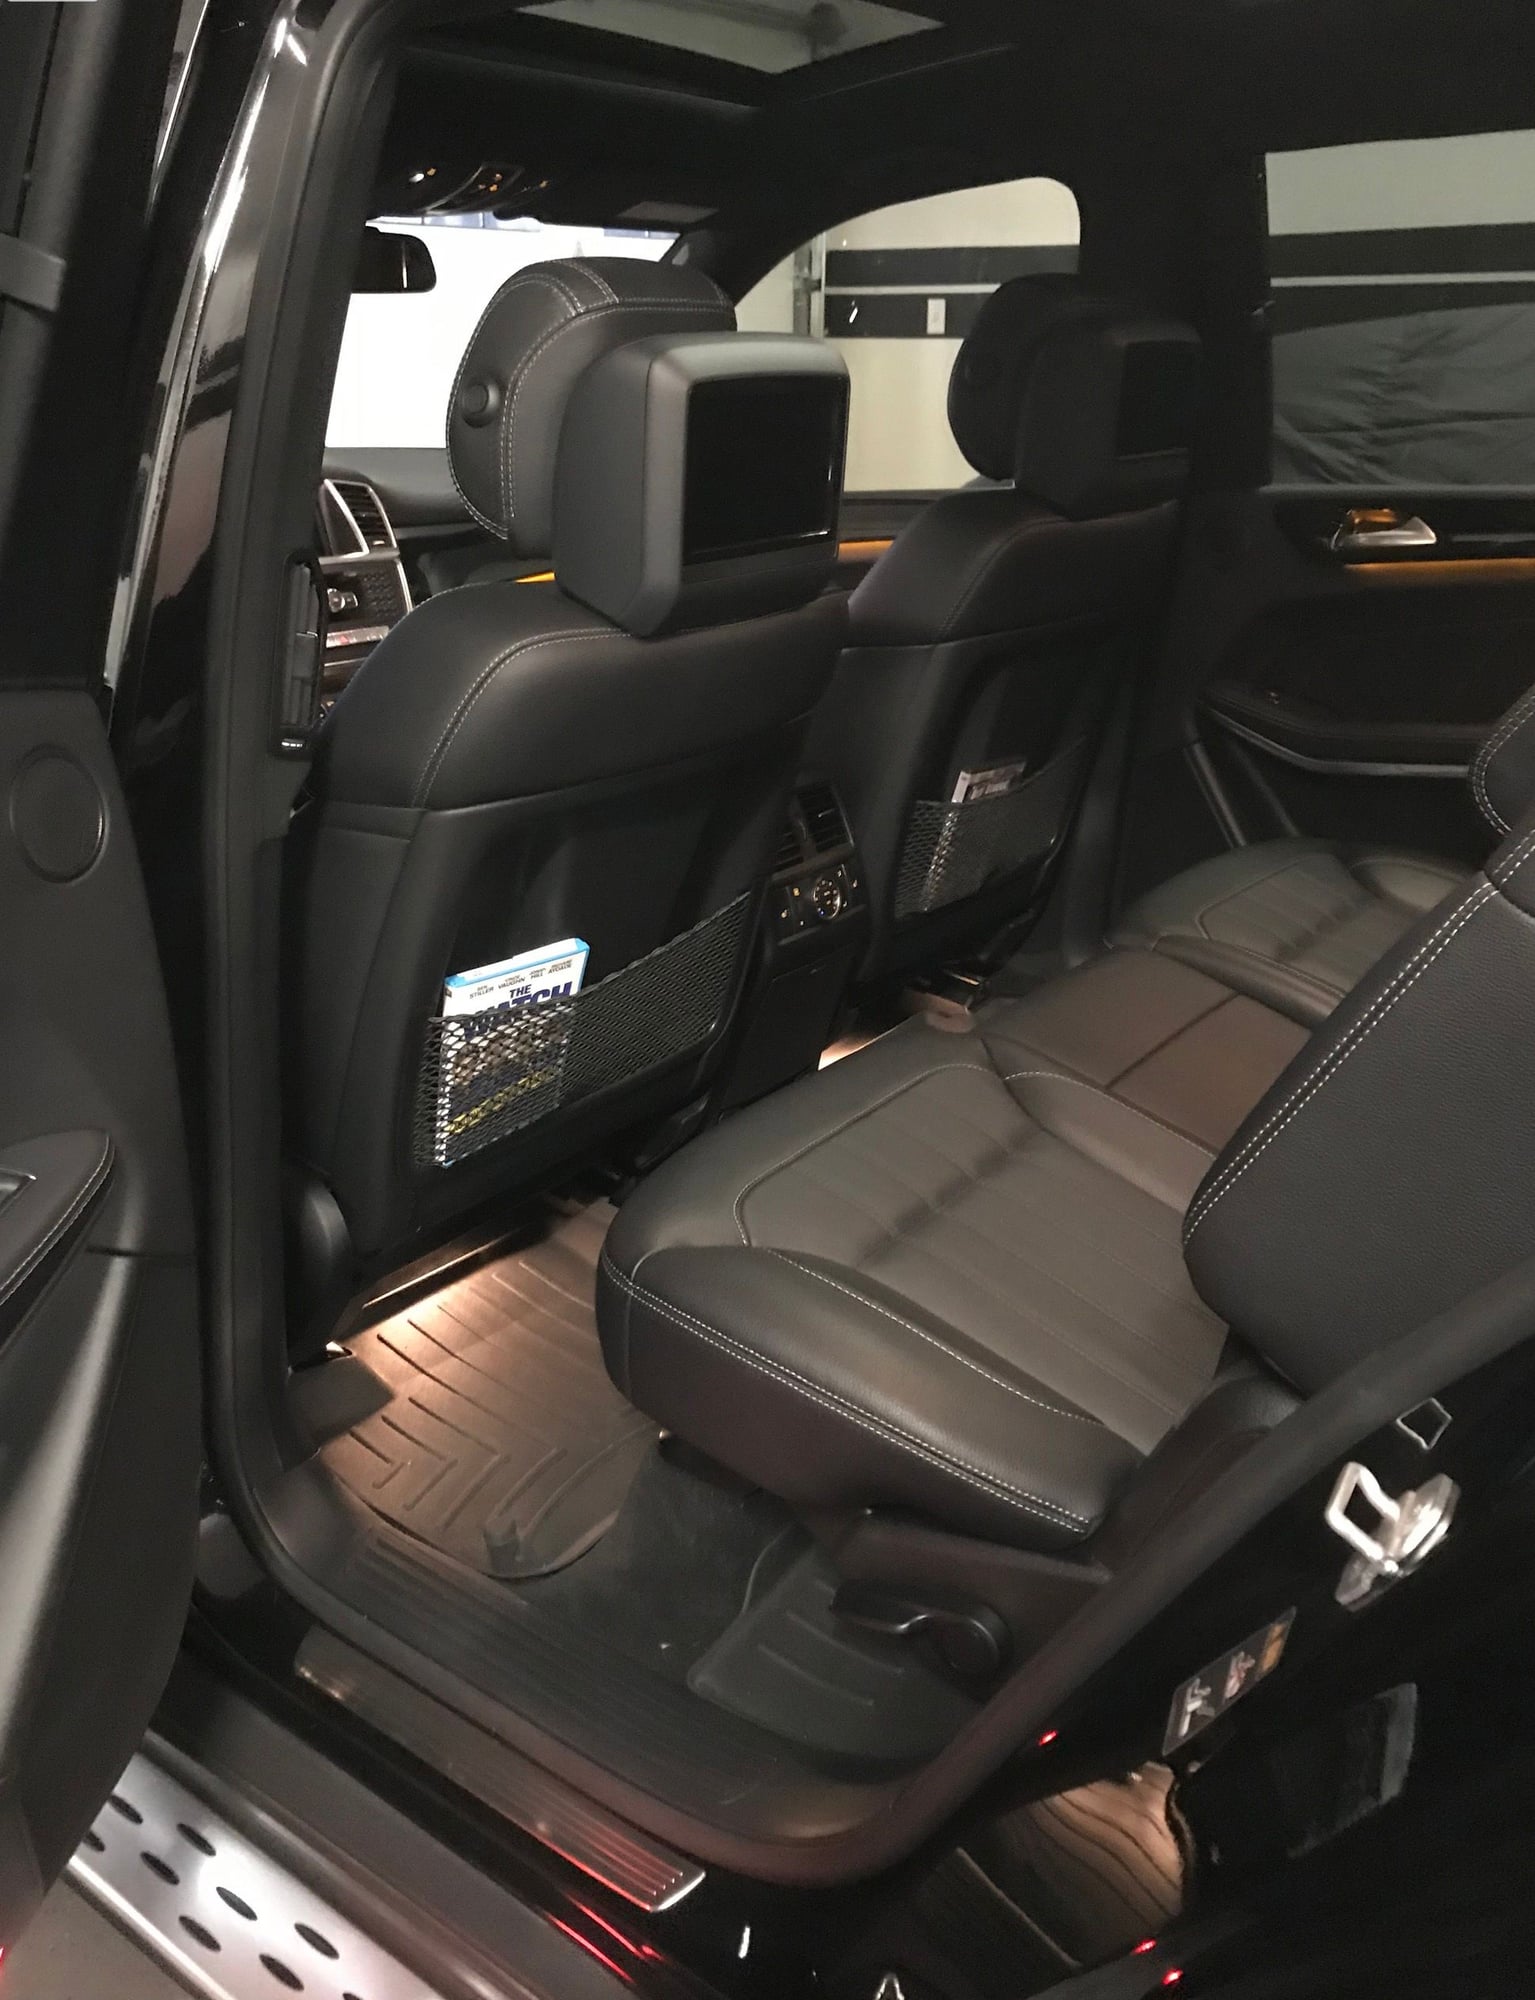 2014 Mercedes-Benz GL350 - FS: 2014 GL350 - Premium Pkg, Soft Close Doors, Pano Roof, AMG Pkg, Black on Black - Used - VIN 4JGDF2EE1EA419679 - 6 cyl - AWD - Automatic - SUV - Black - Toronto, ON L3R5C2, Canada